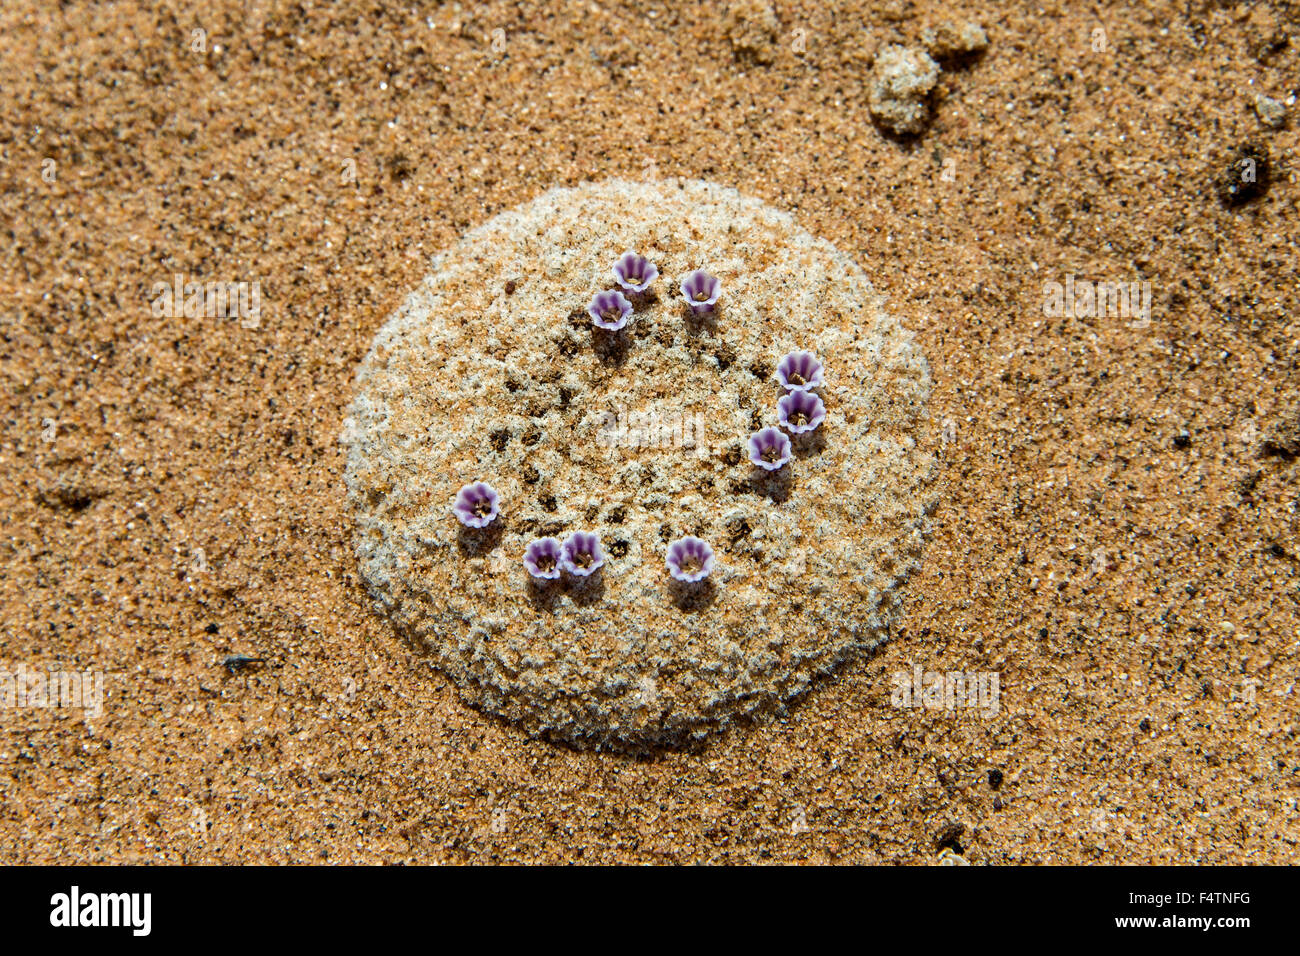 sandfood, plant, Pholisma sonorae, sand, round, Arizona, USA, America, Stock Photo